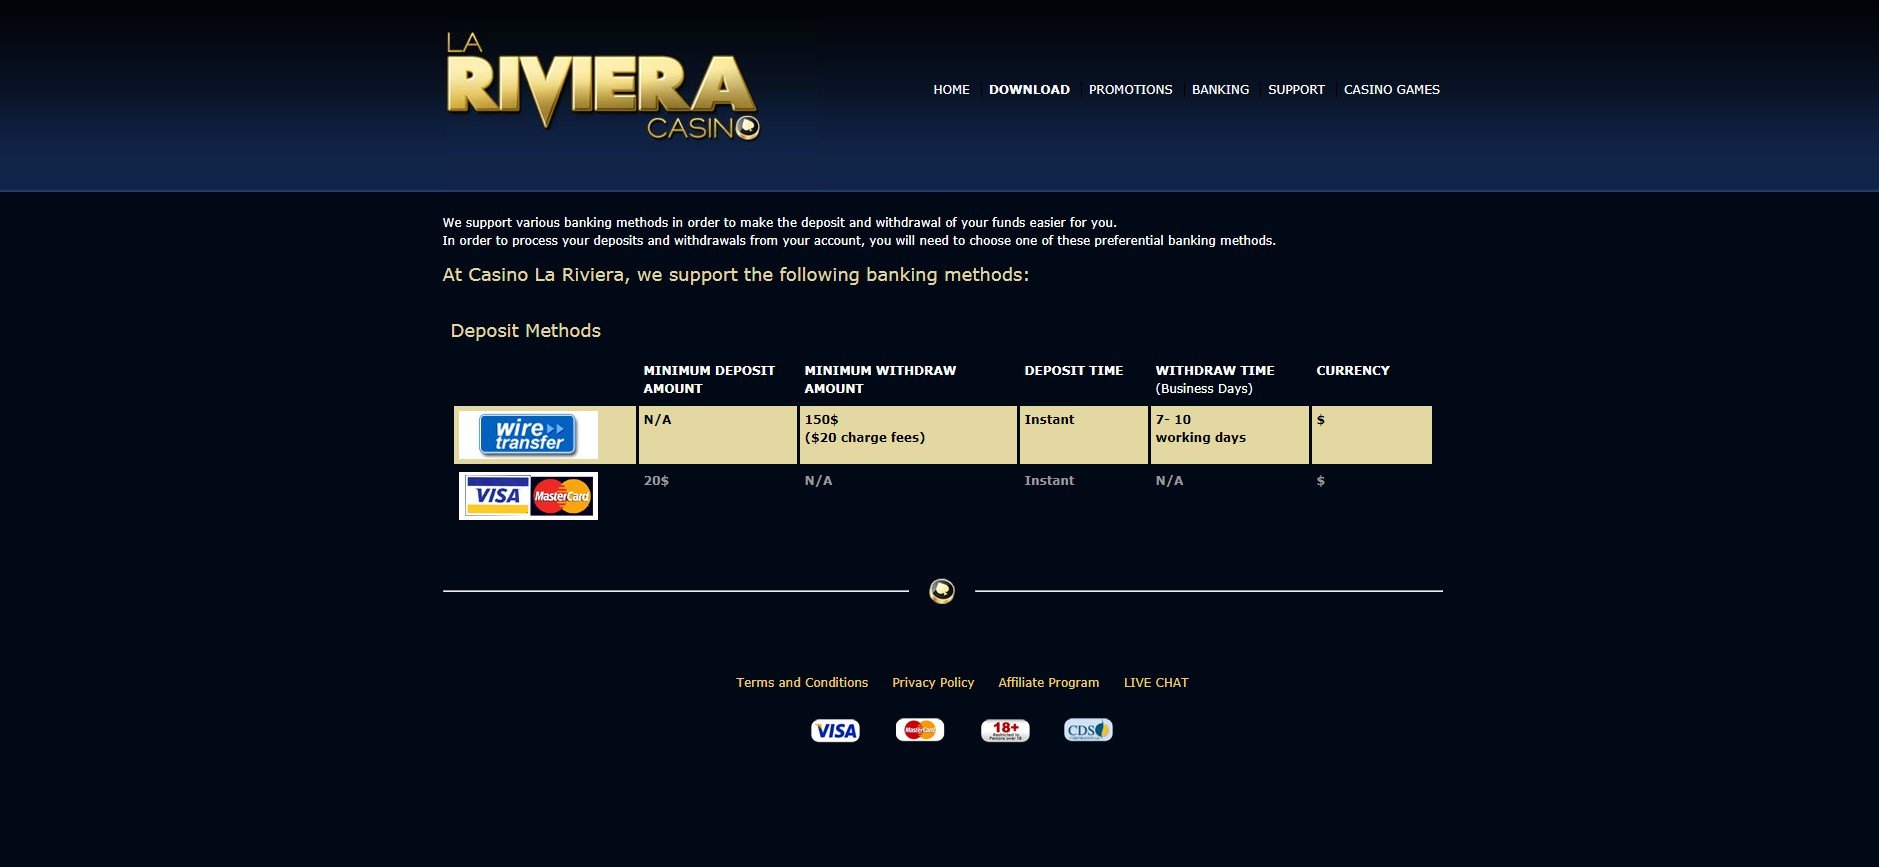 La Riviera Casino Payment Methods